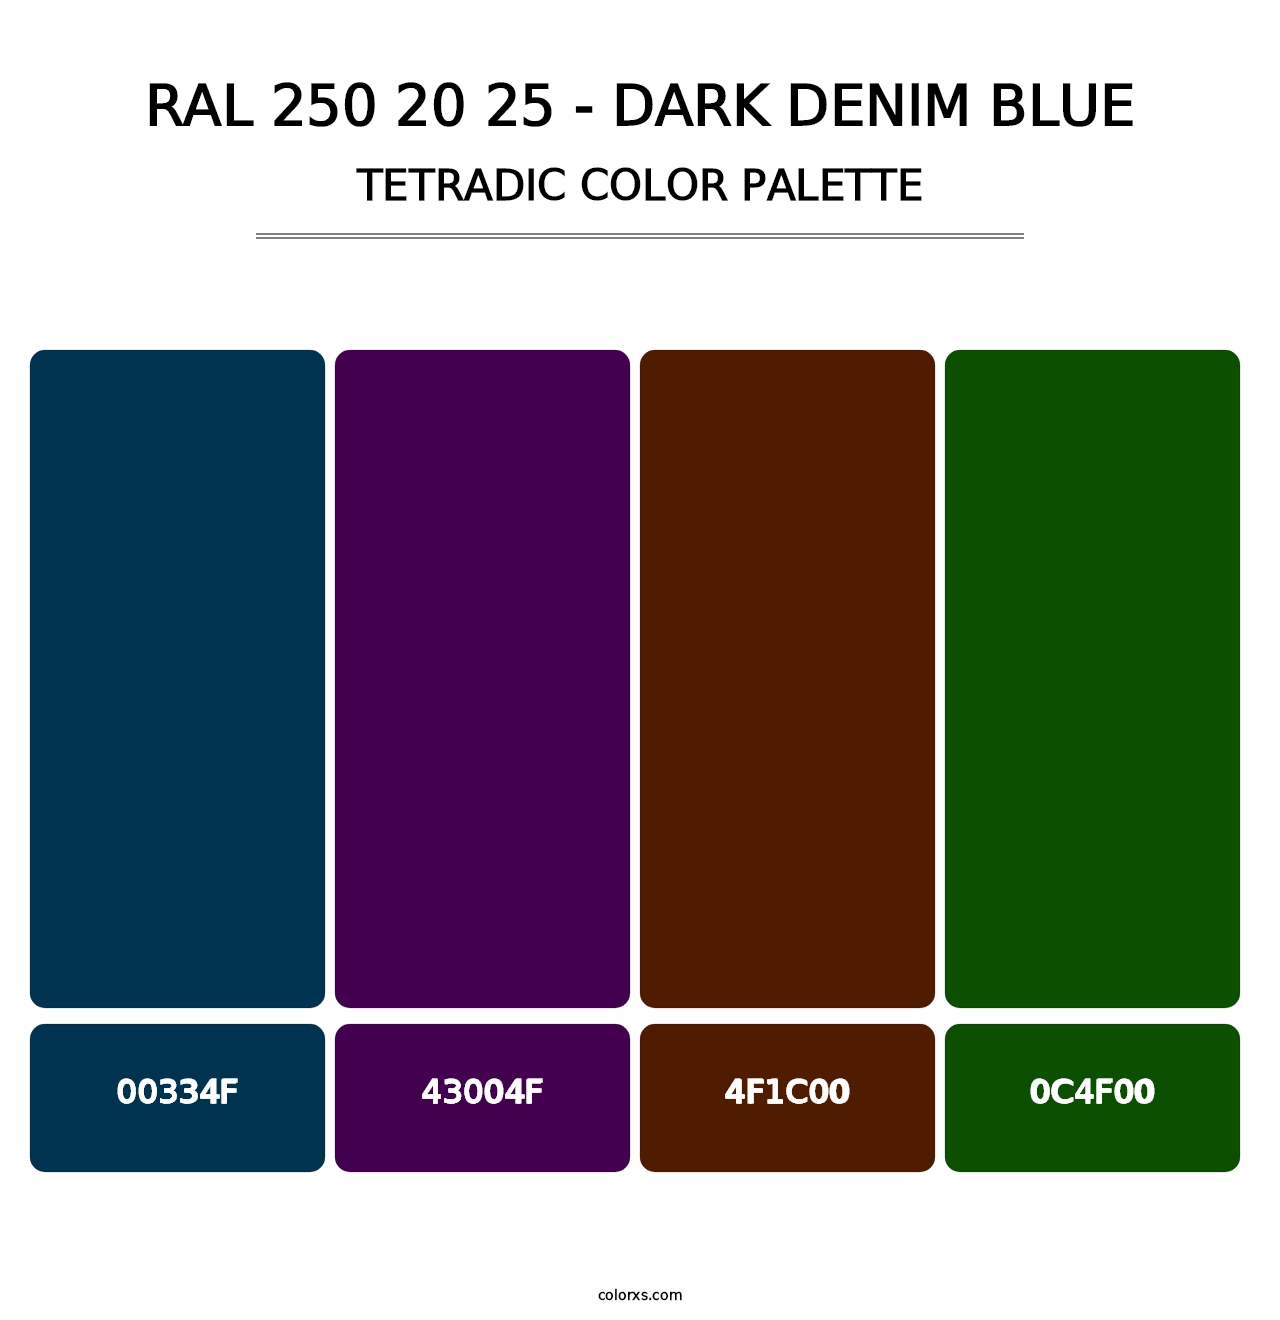 RAL 250 20 25 - Dark Denim Blue - Tetradic Color Palette